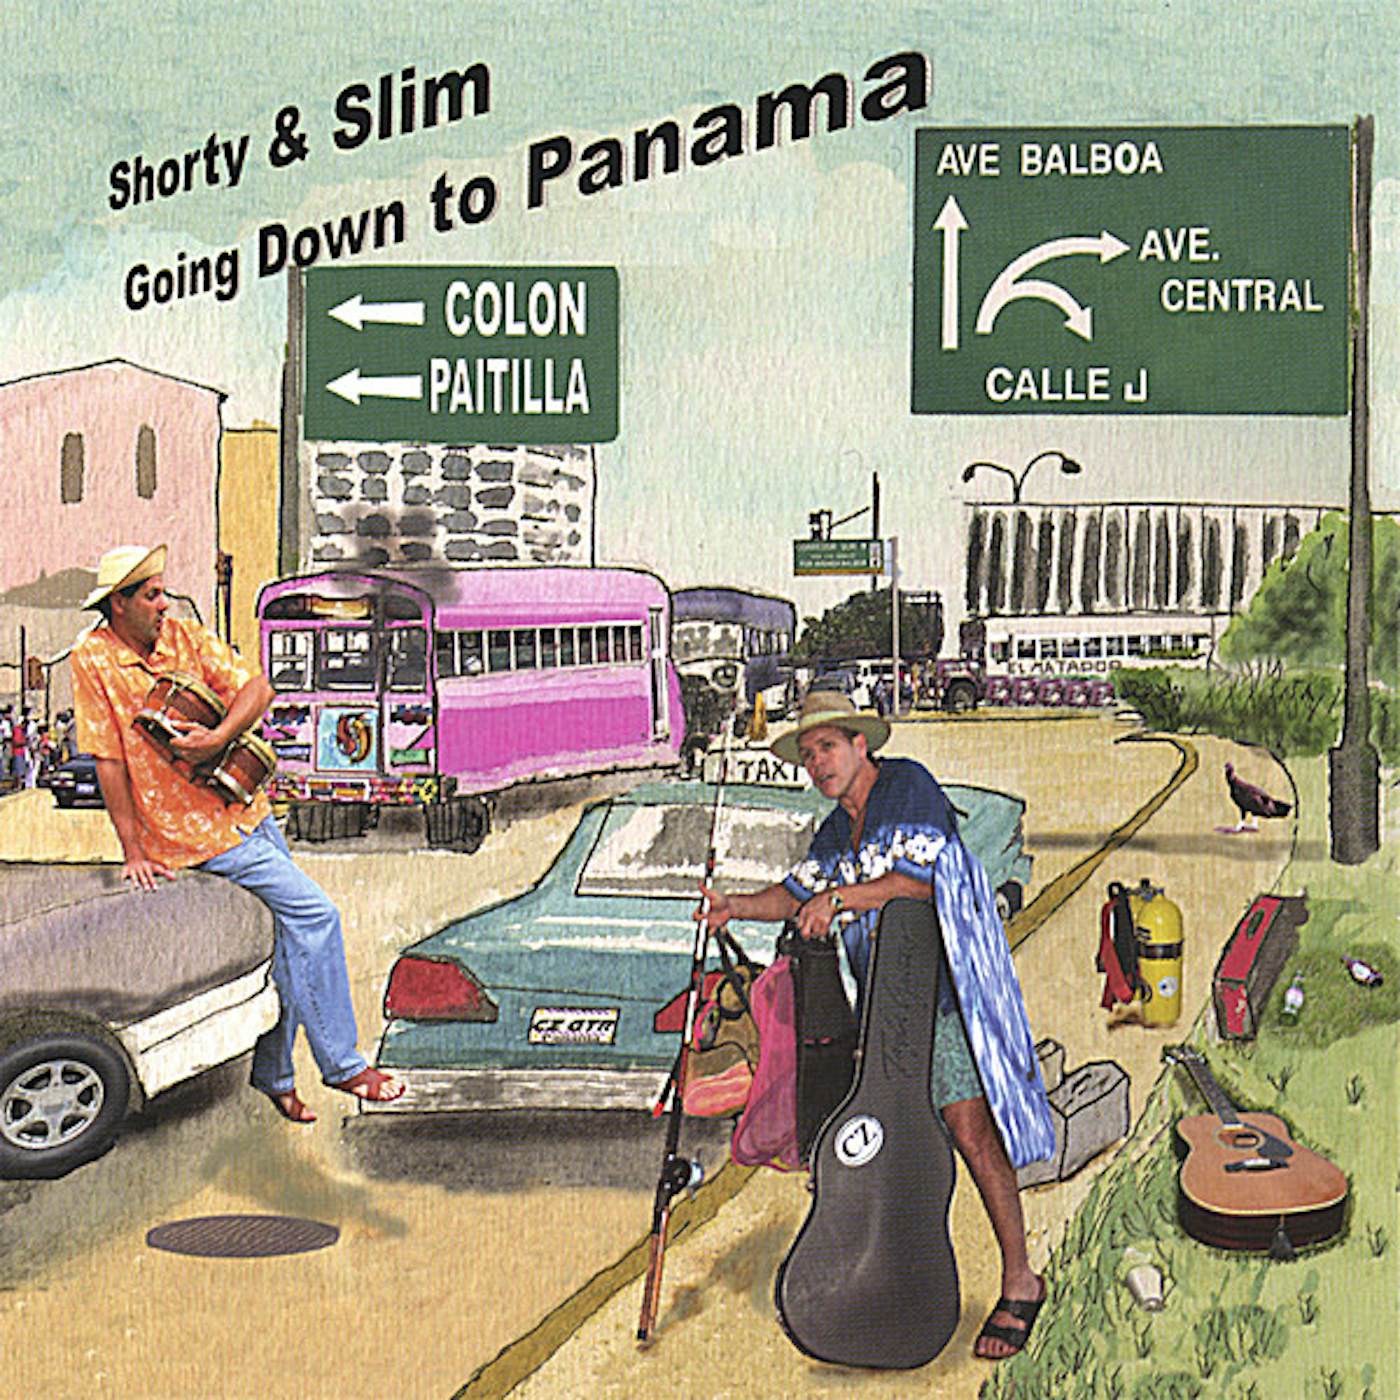 Shorty&Slim GOING DOWN TO PANAMA CD